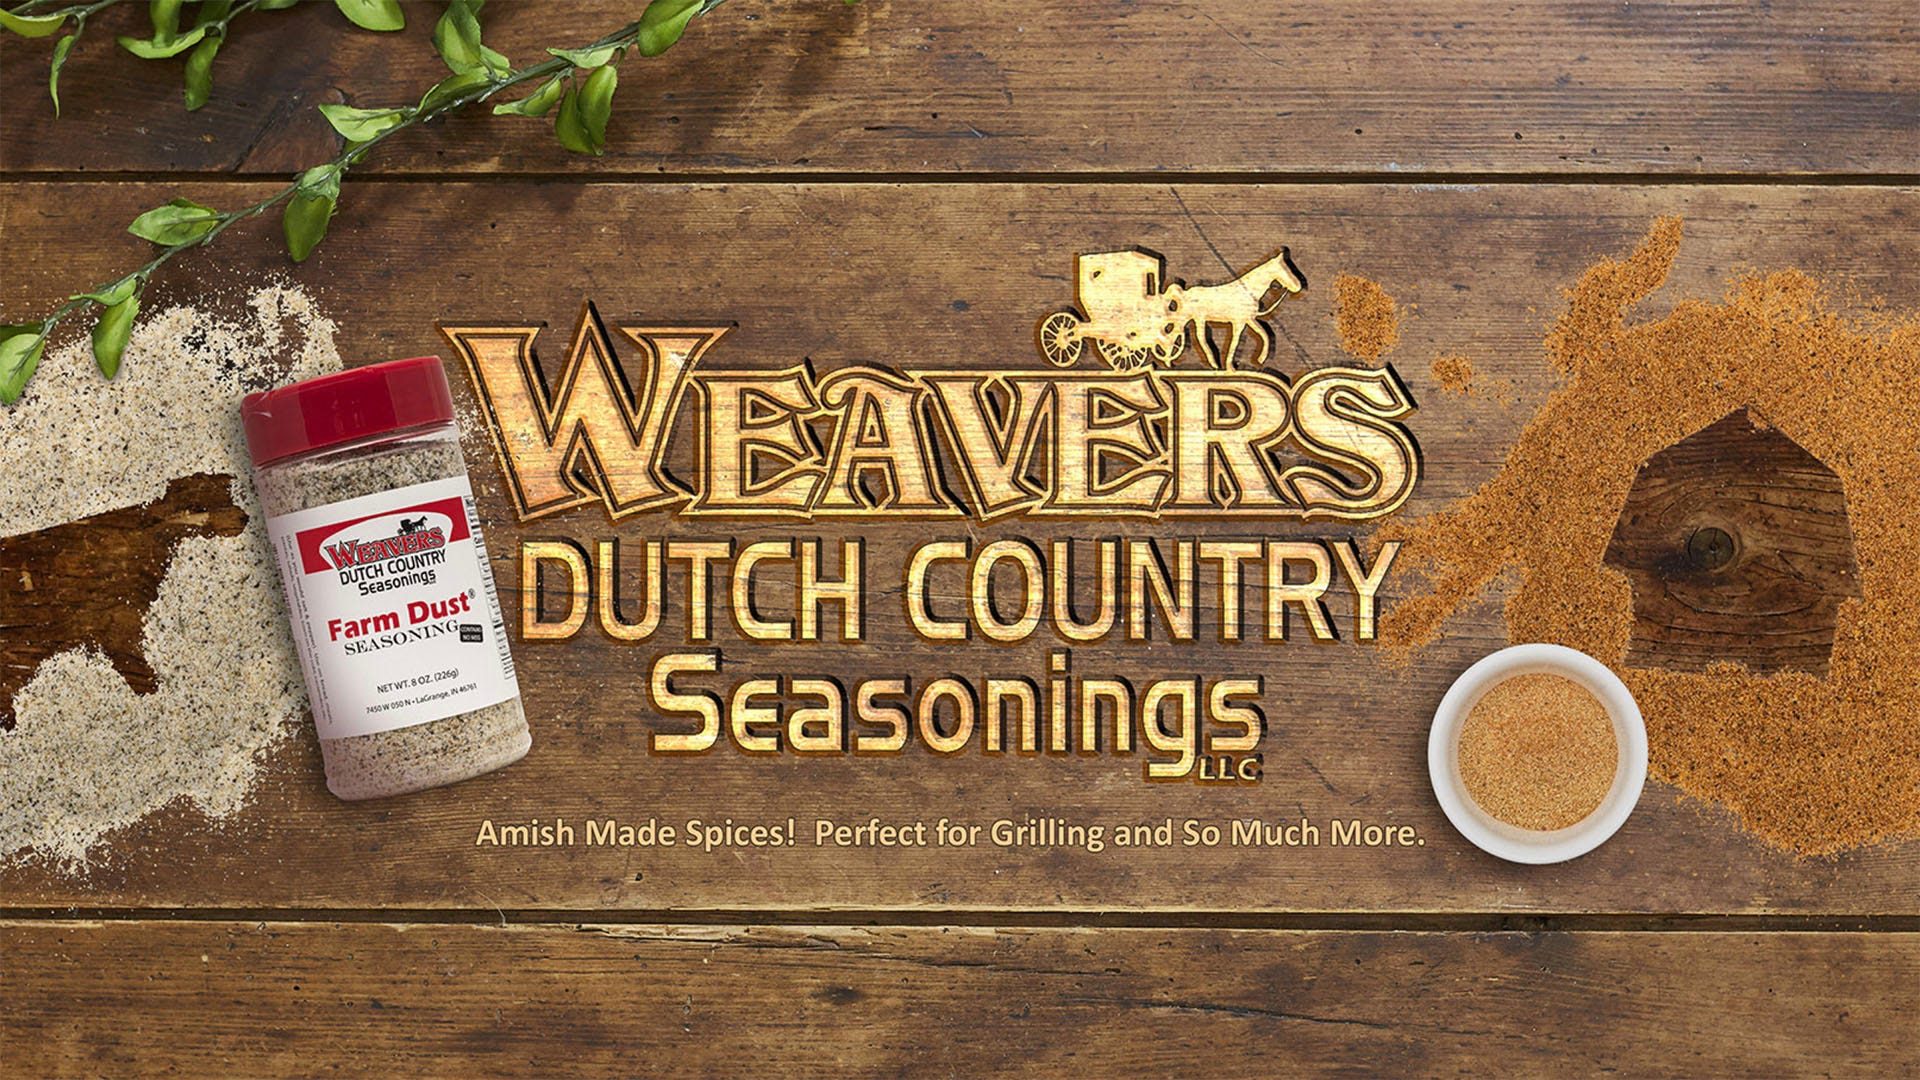 Weavers Dutch Country Seasonings Farm Dust All Natural Himylayan Salt